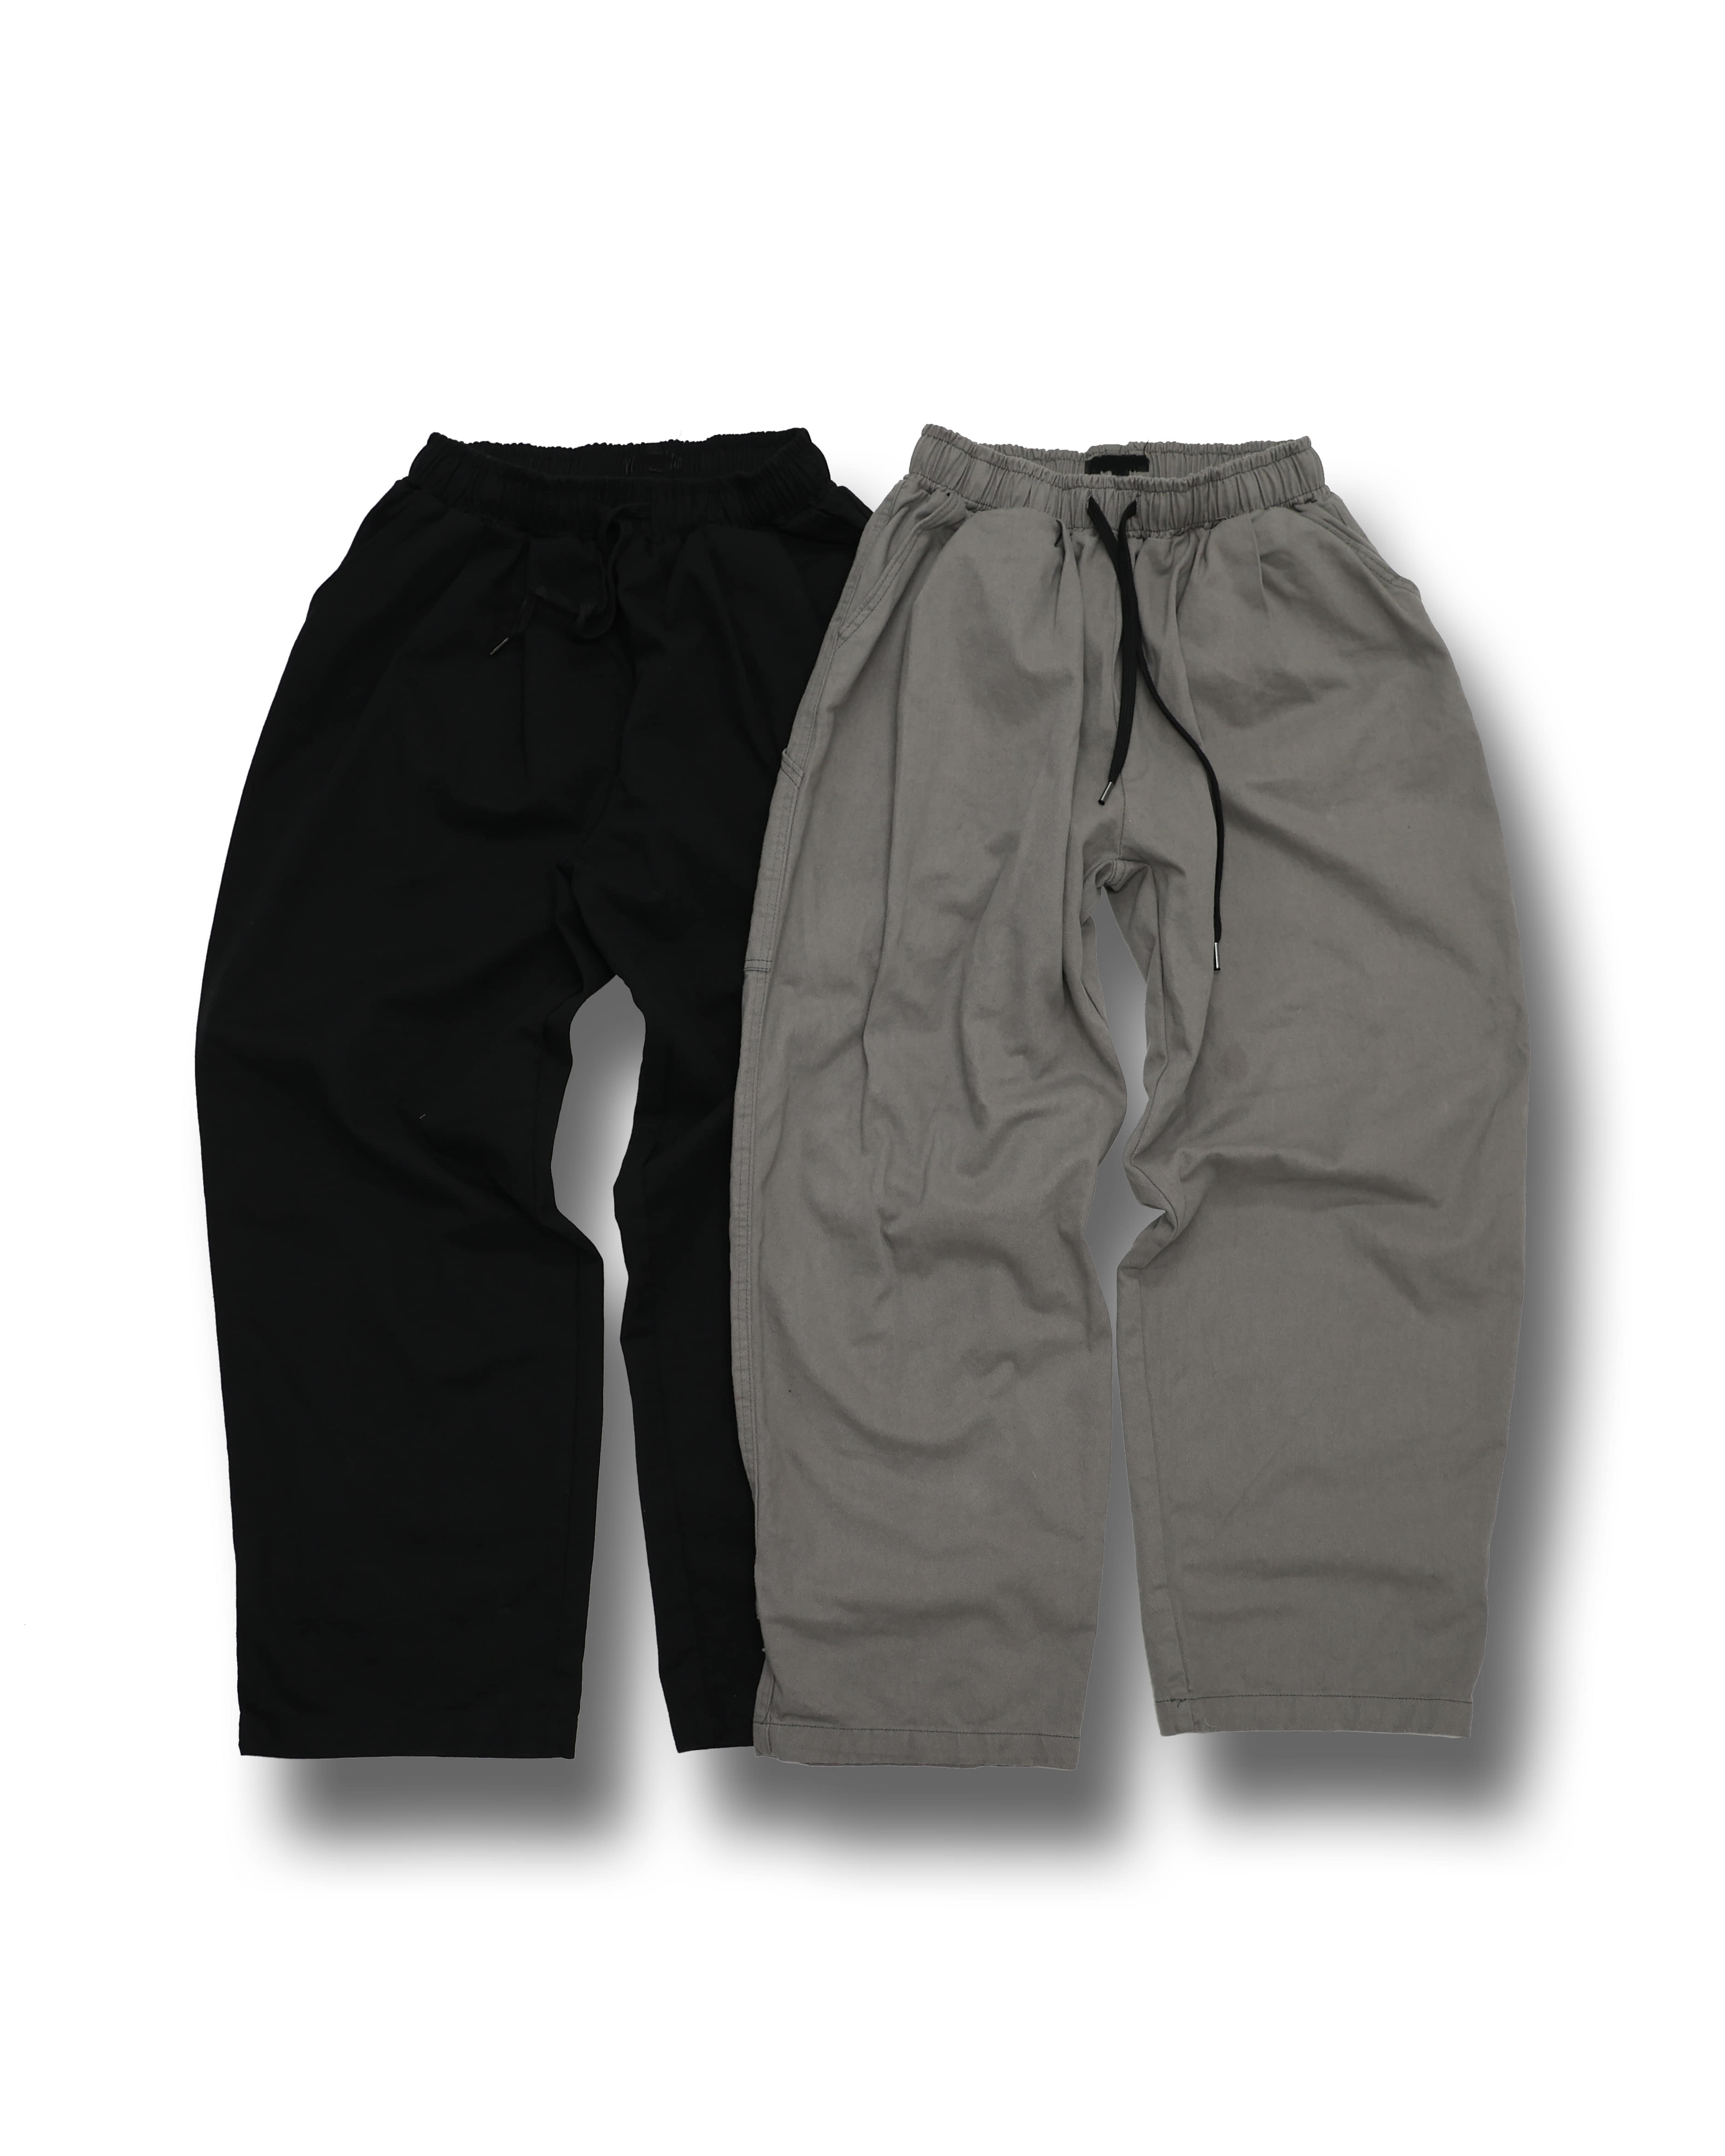 Glam Button Carpenter Pants (Black/Gray)